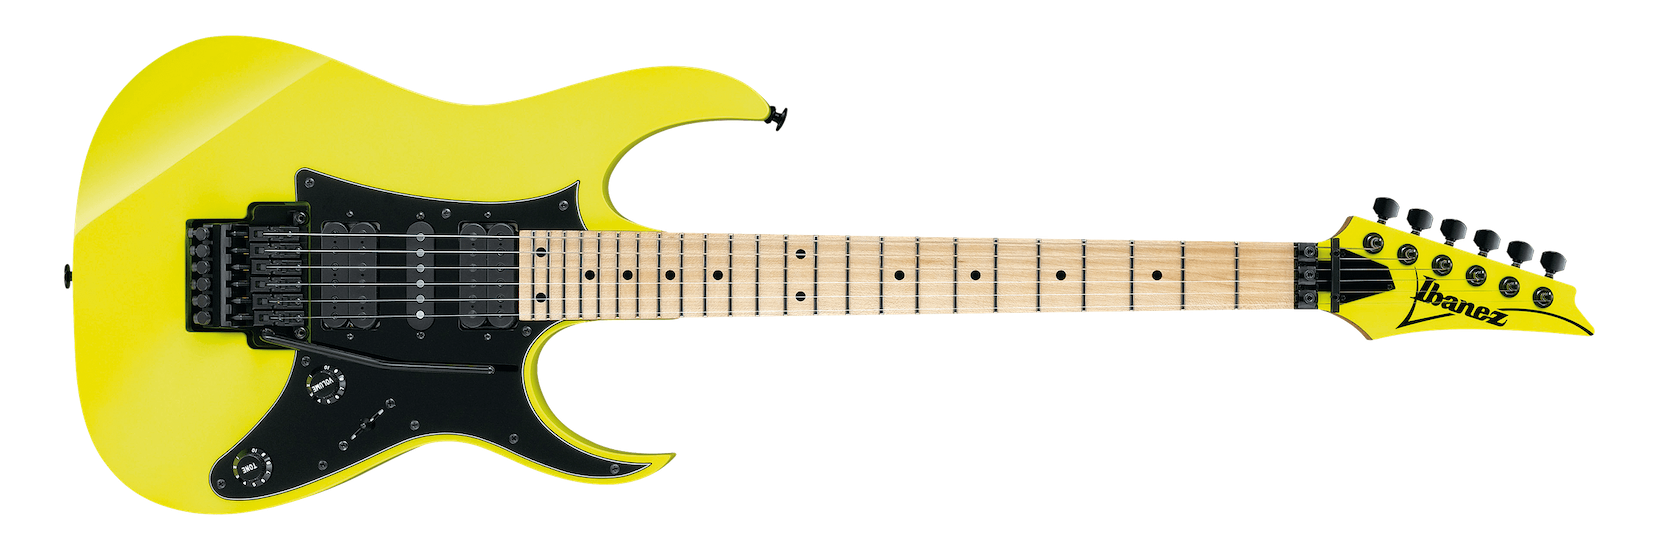 Ibanez RG550 RG Genesis Collection Electric Guitar - Desert Sun Yellow